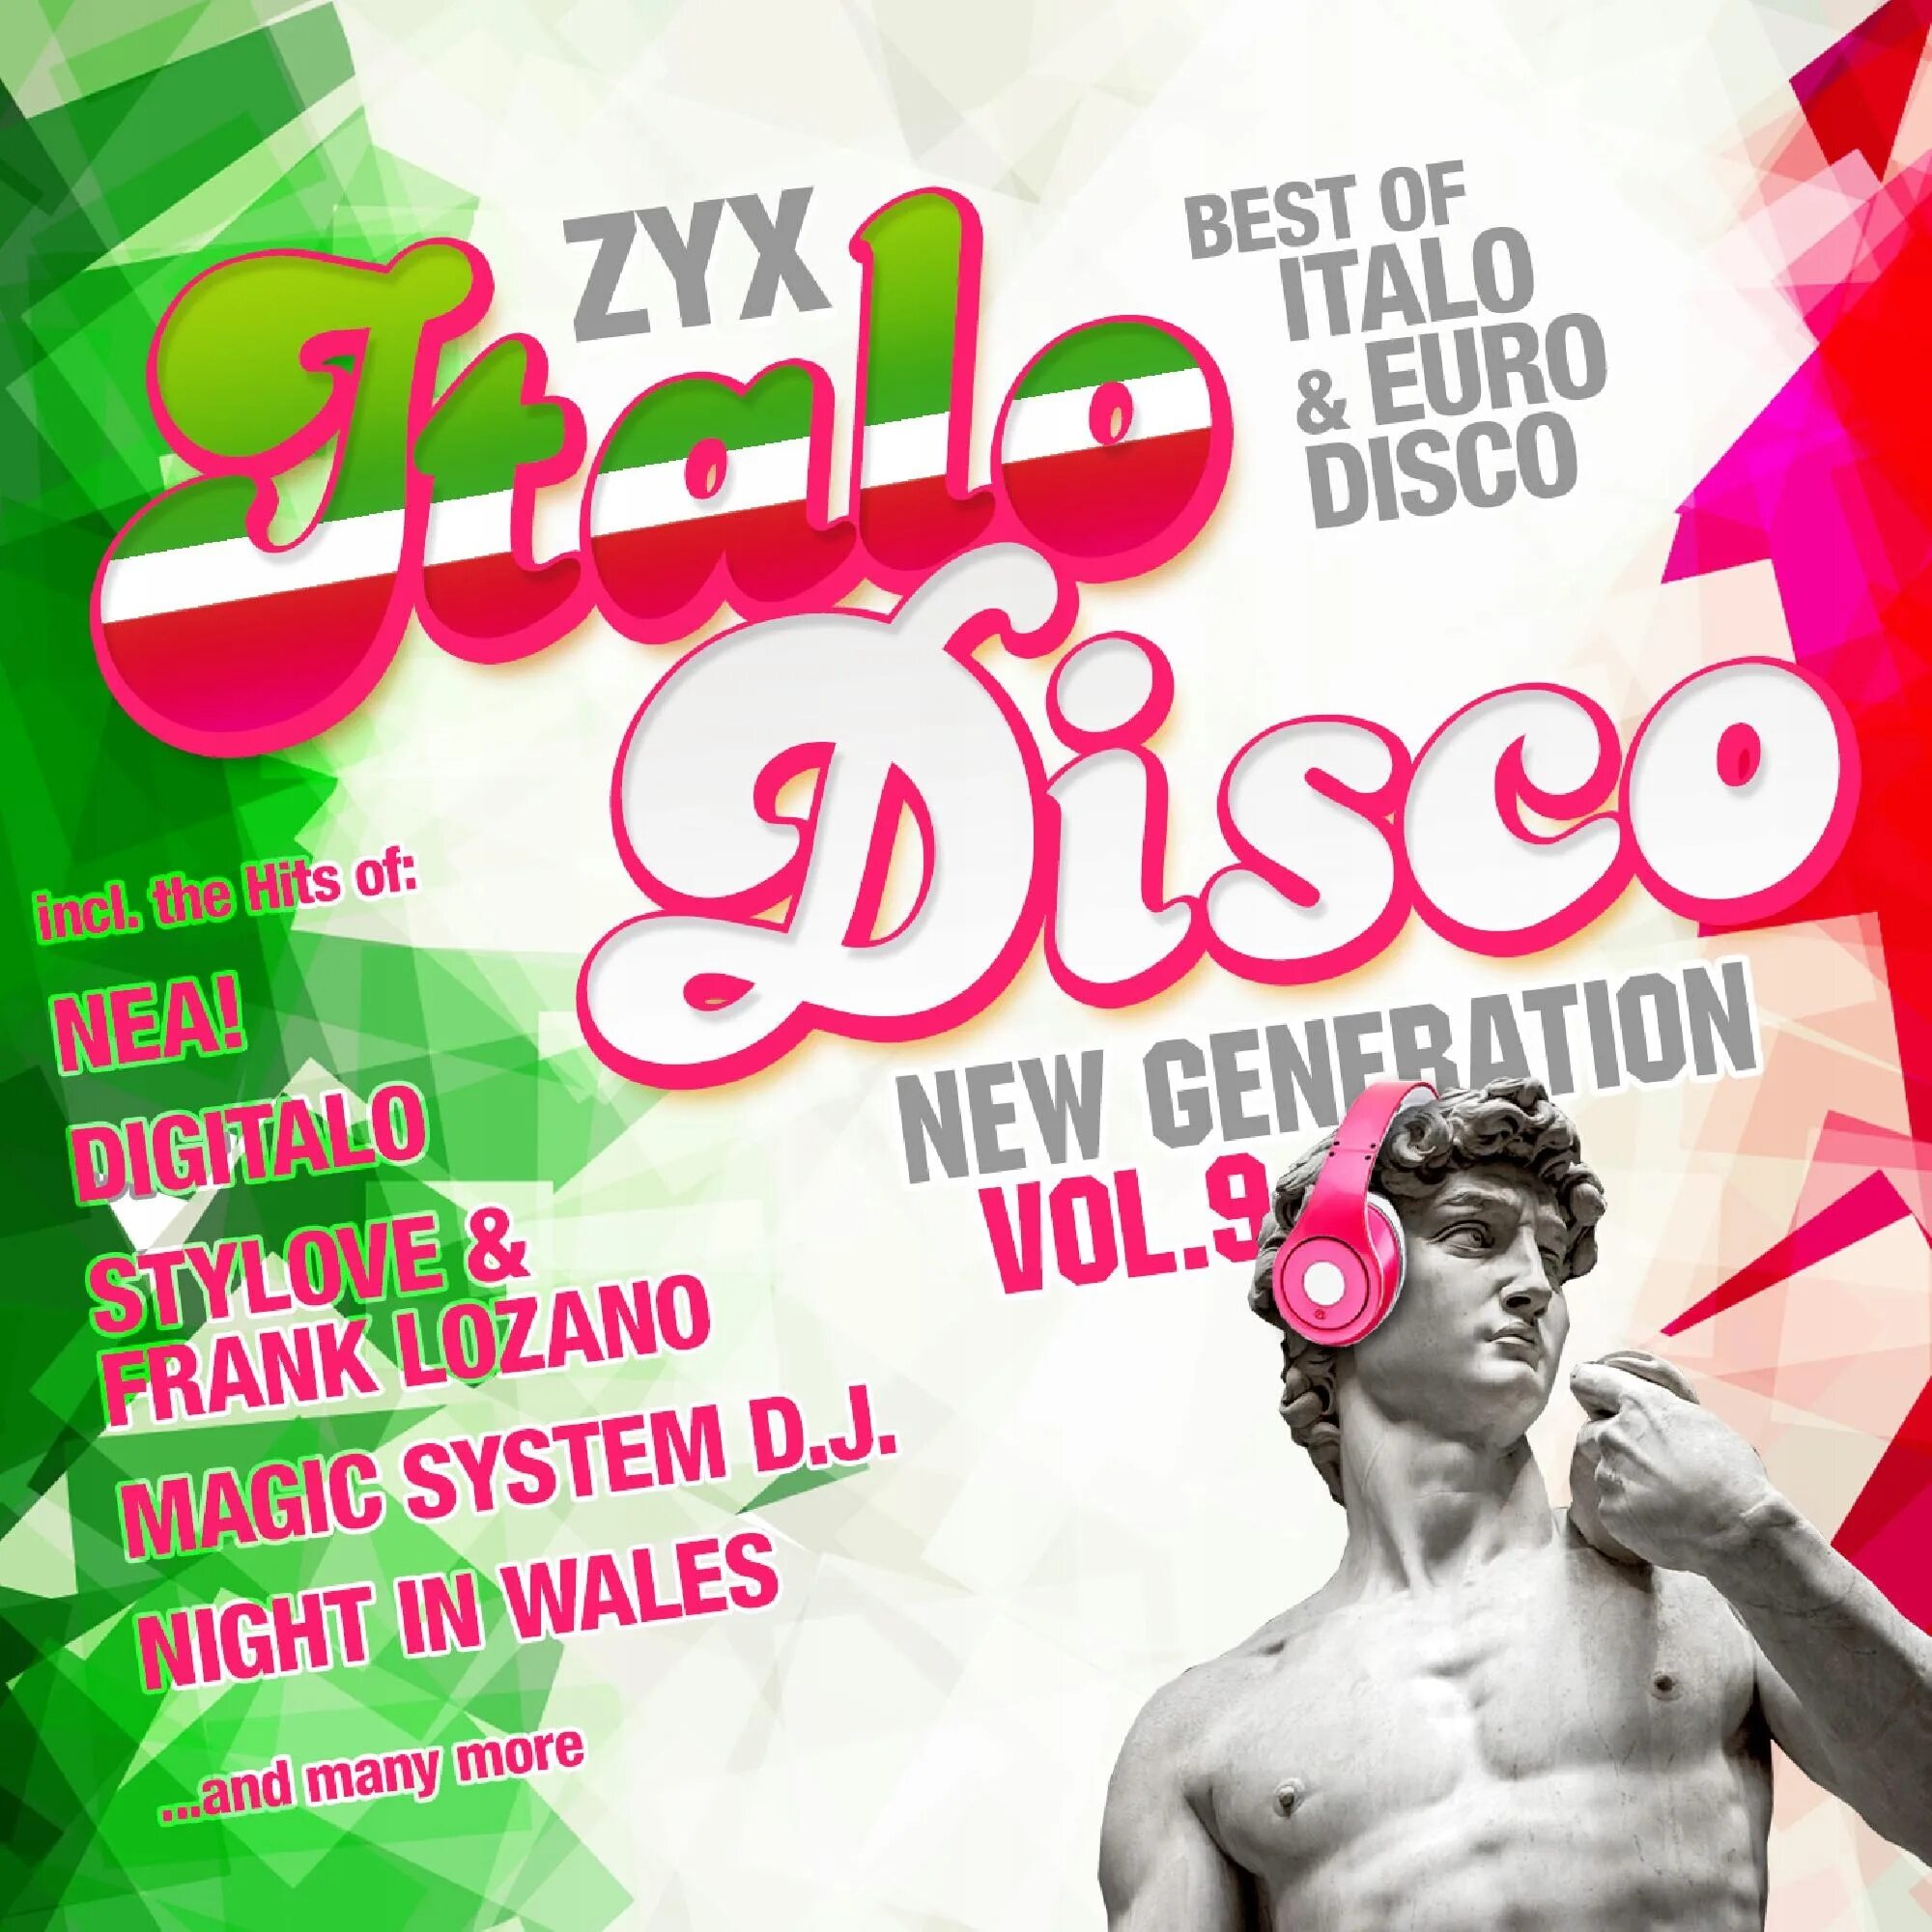 Italo Disco New Generation Vol. ZYX Italo Disco New Generation Vol.15. ZYX Italo Disco New Generation.